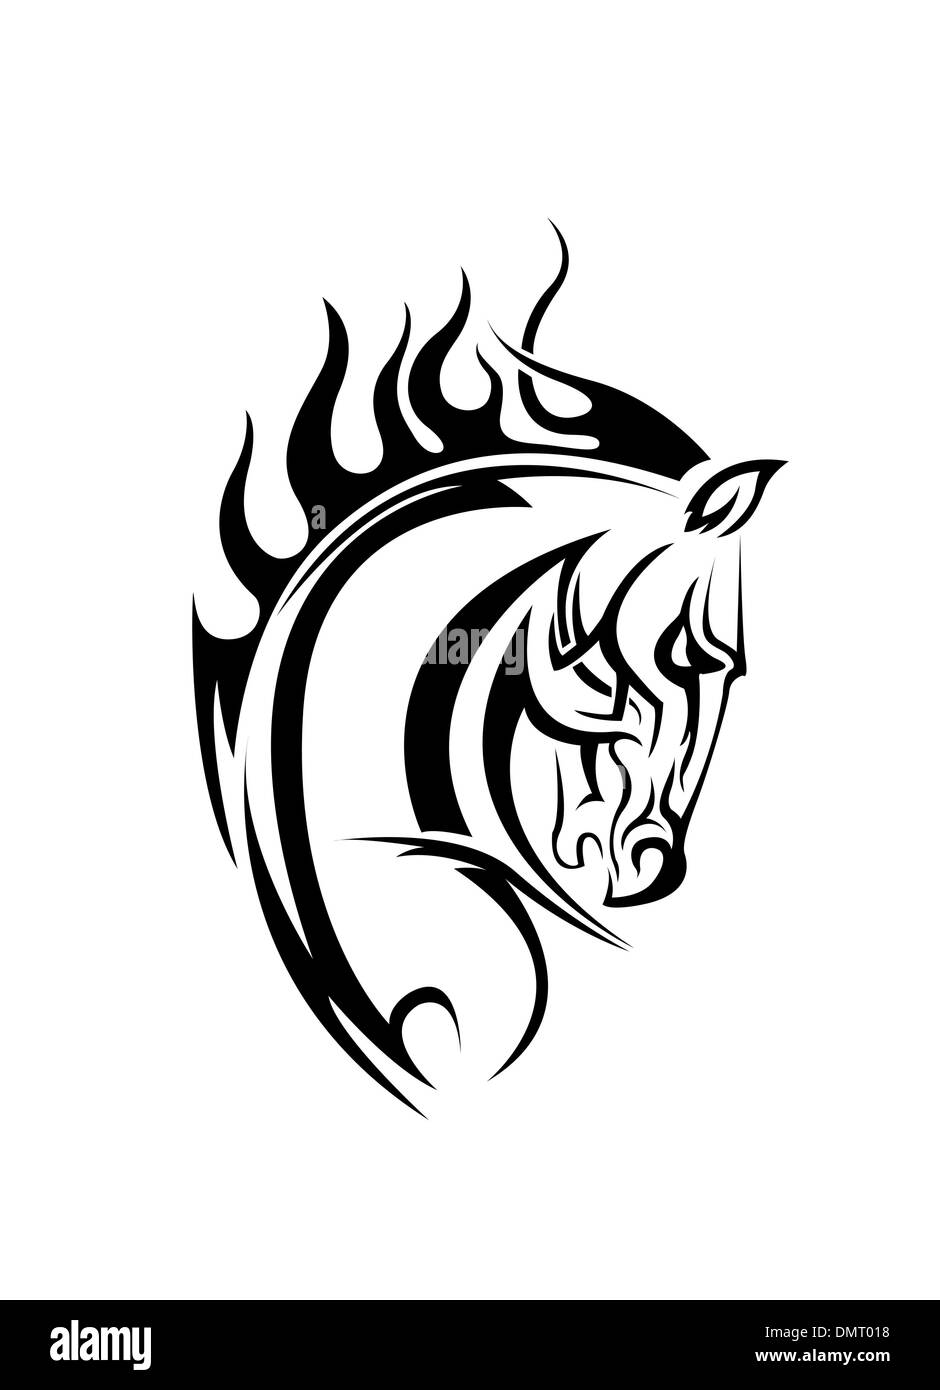 Horse head tattoo design Royalty Free Vector Image